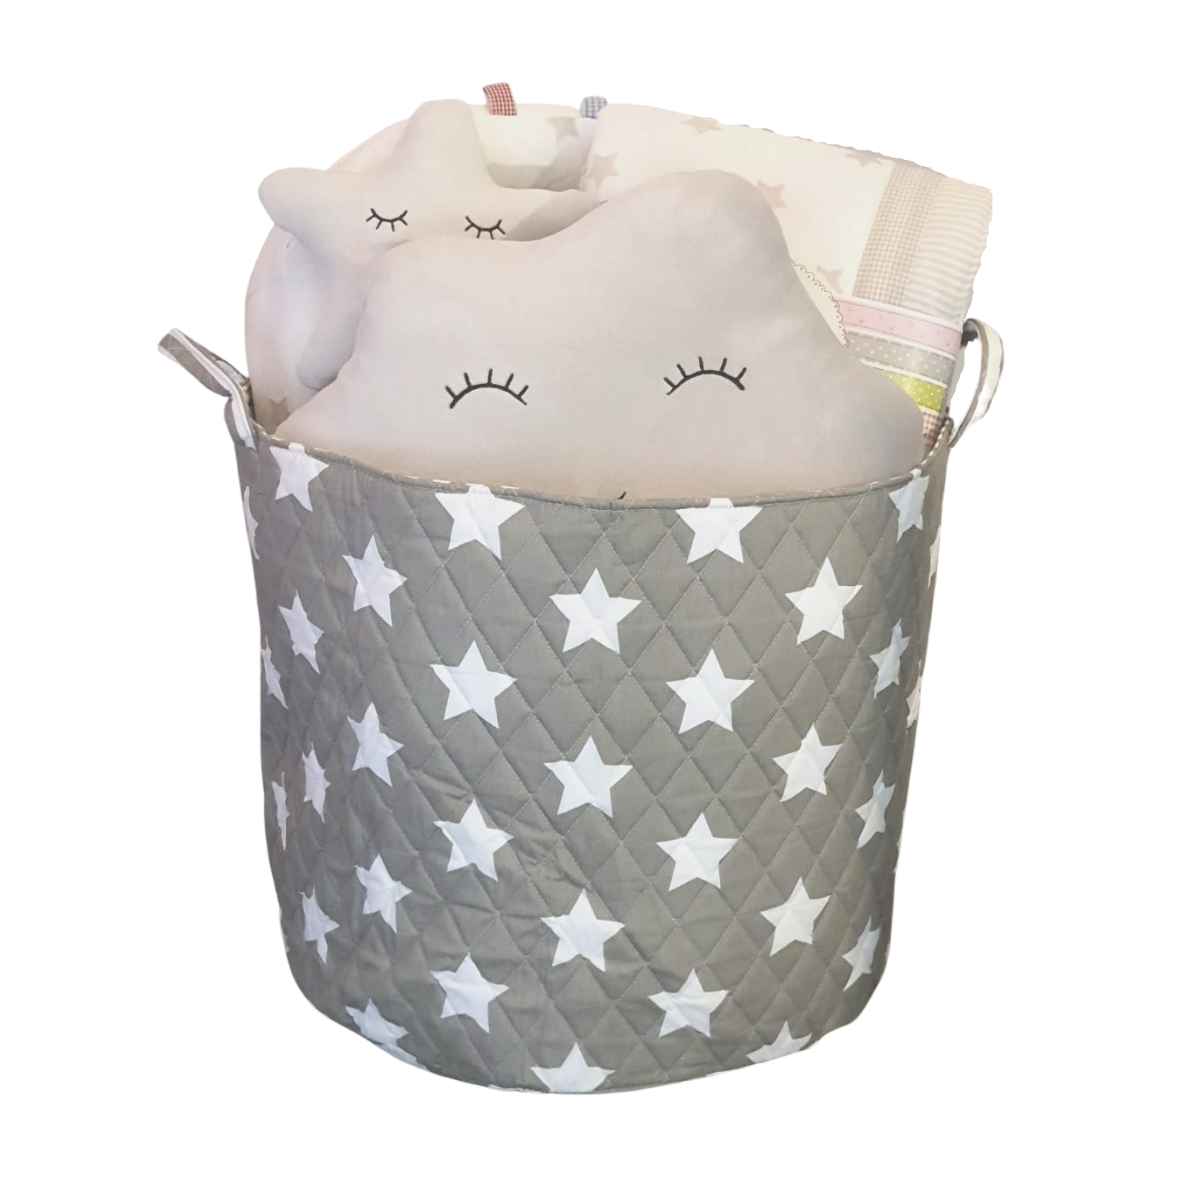 Special Large Gift Basket - Grey Star